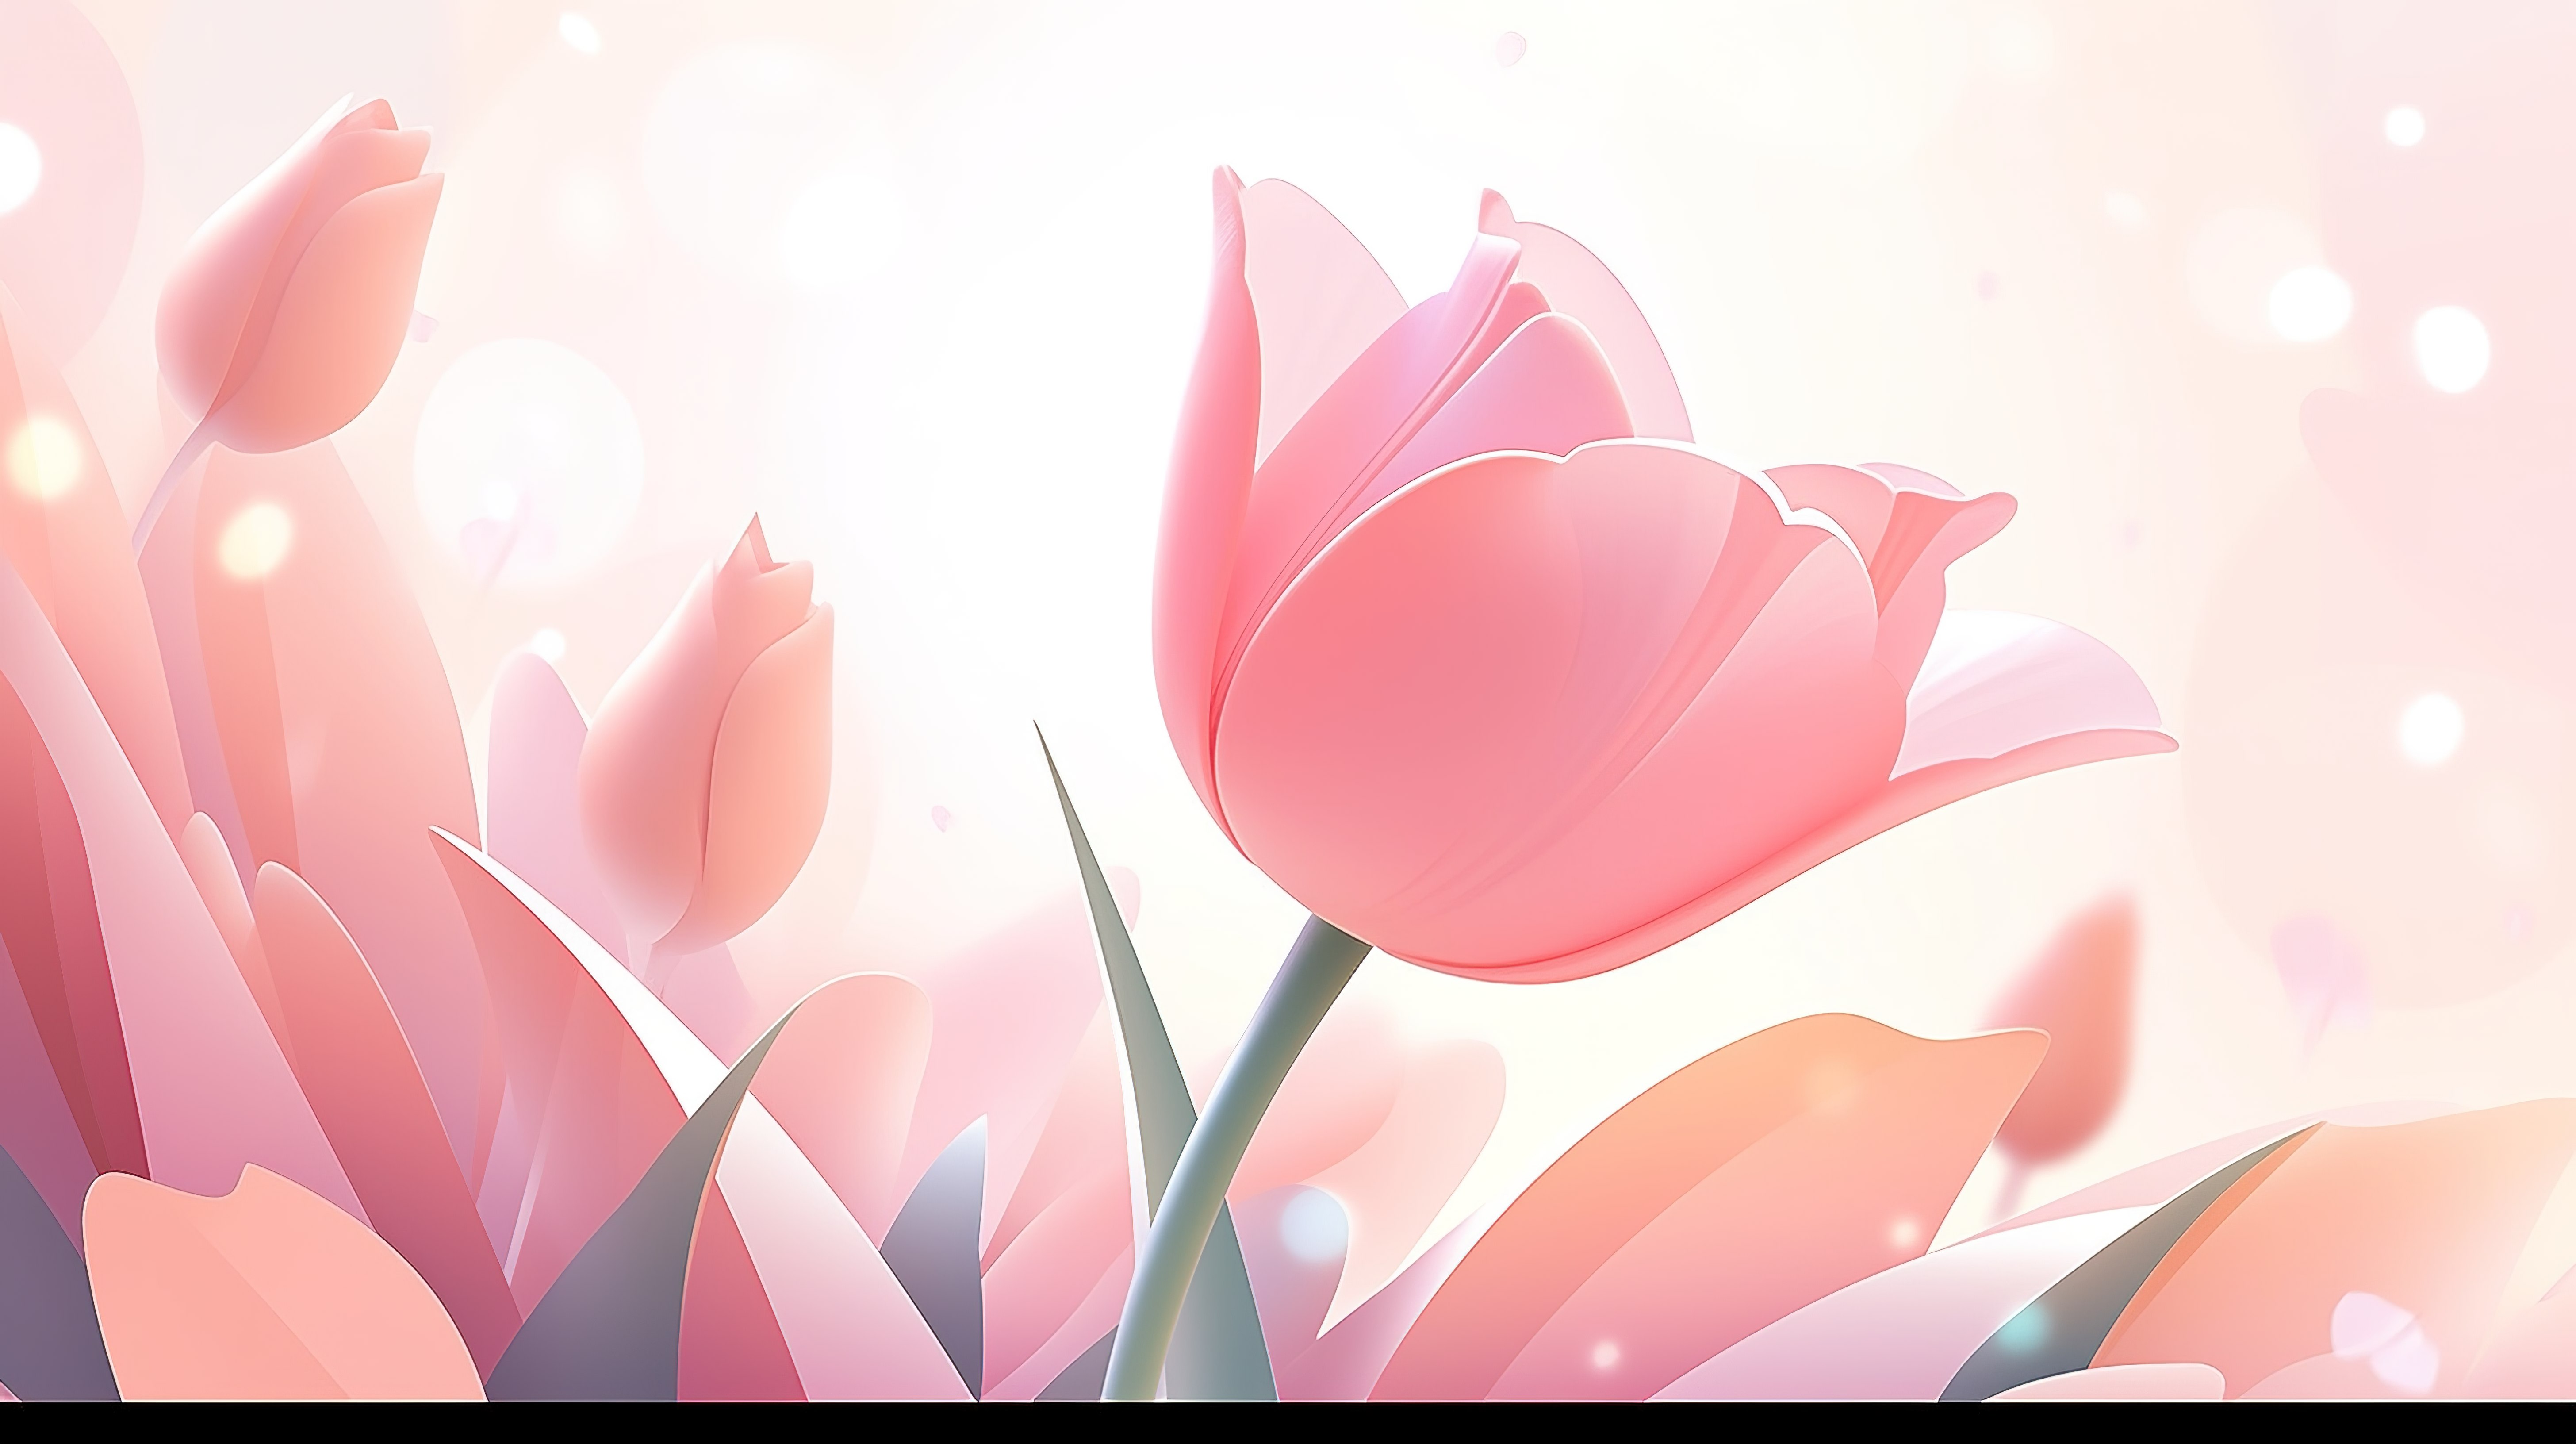 3d 简约风格的别致抽象粉红色郁金香非常适合春季情人节和妇女节卡片设计图片